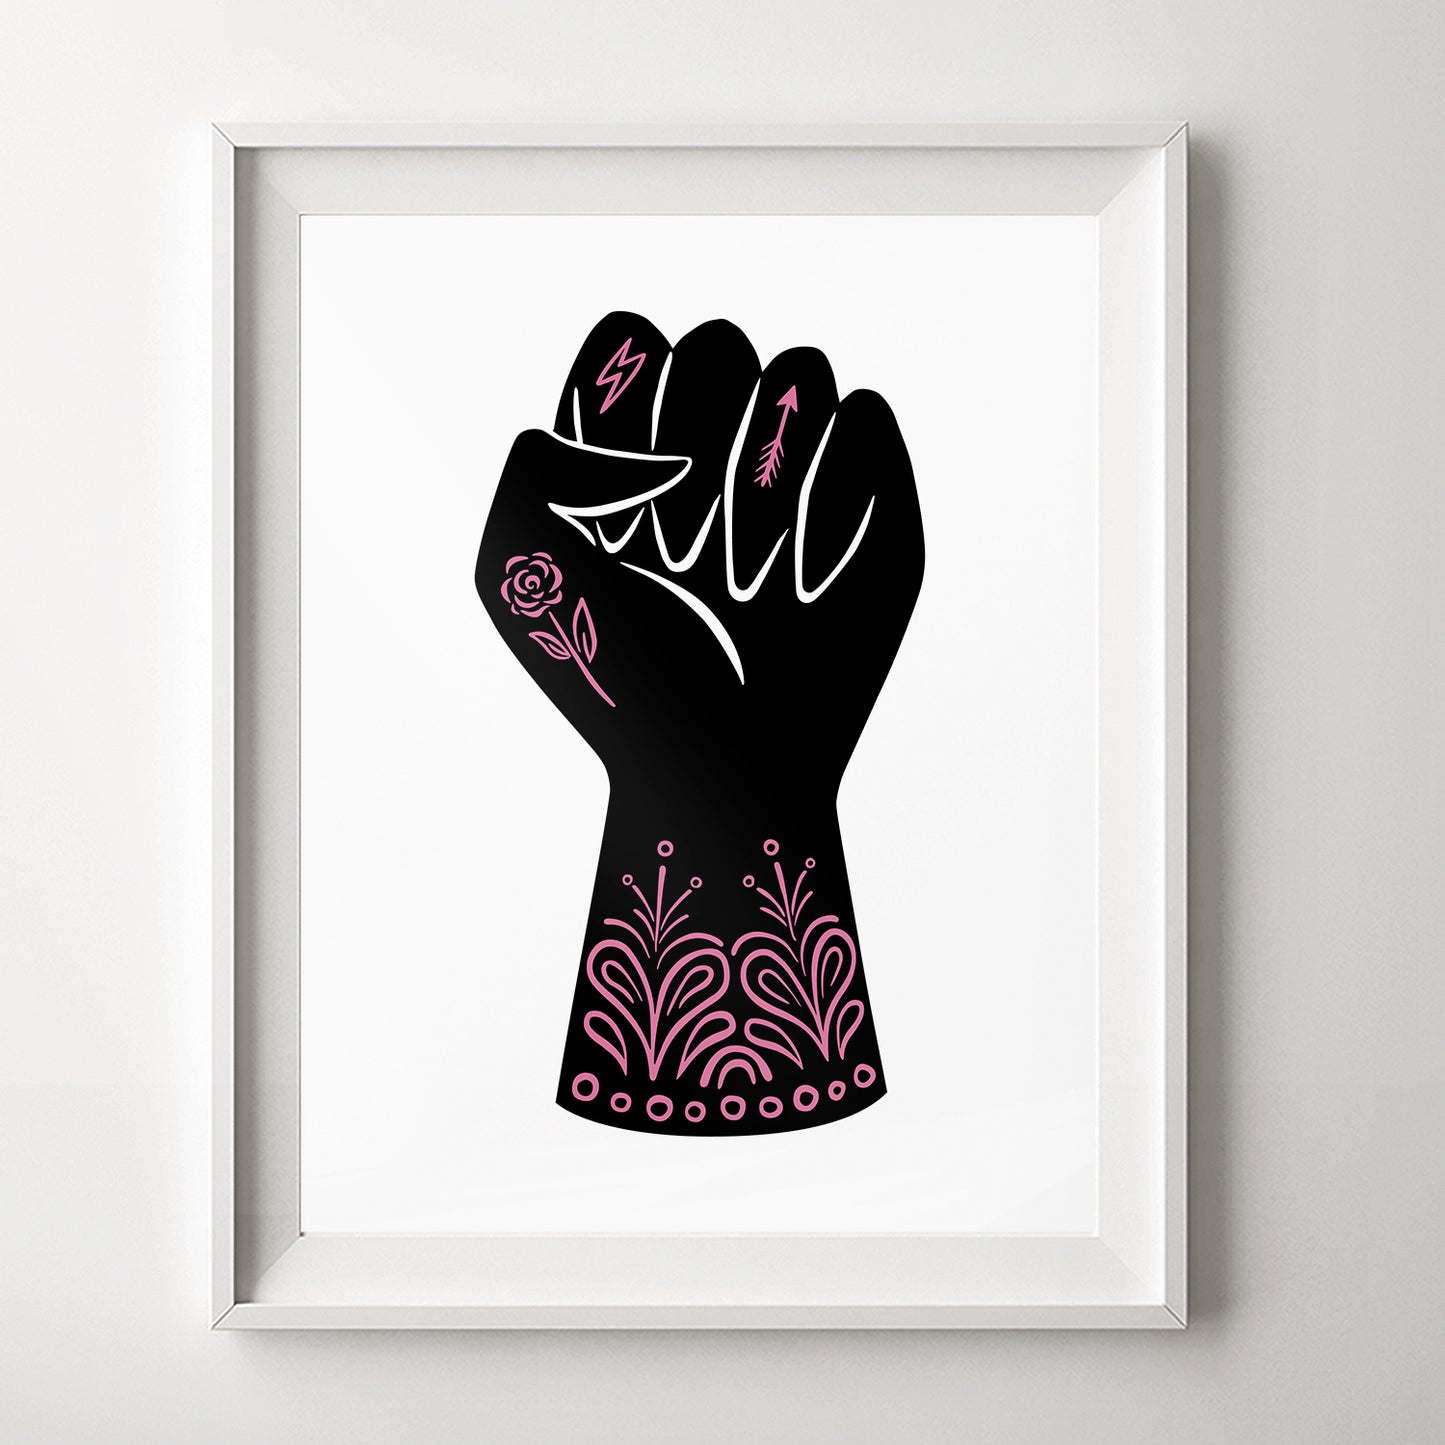 Power Fist Art Print in Black/Pink